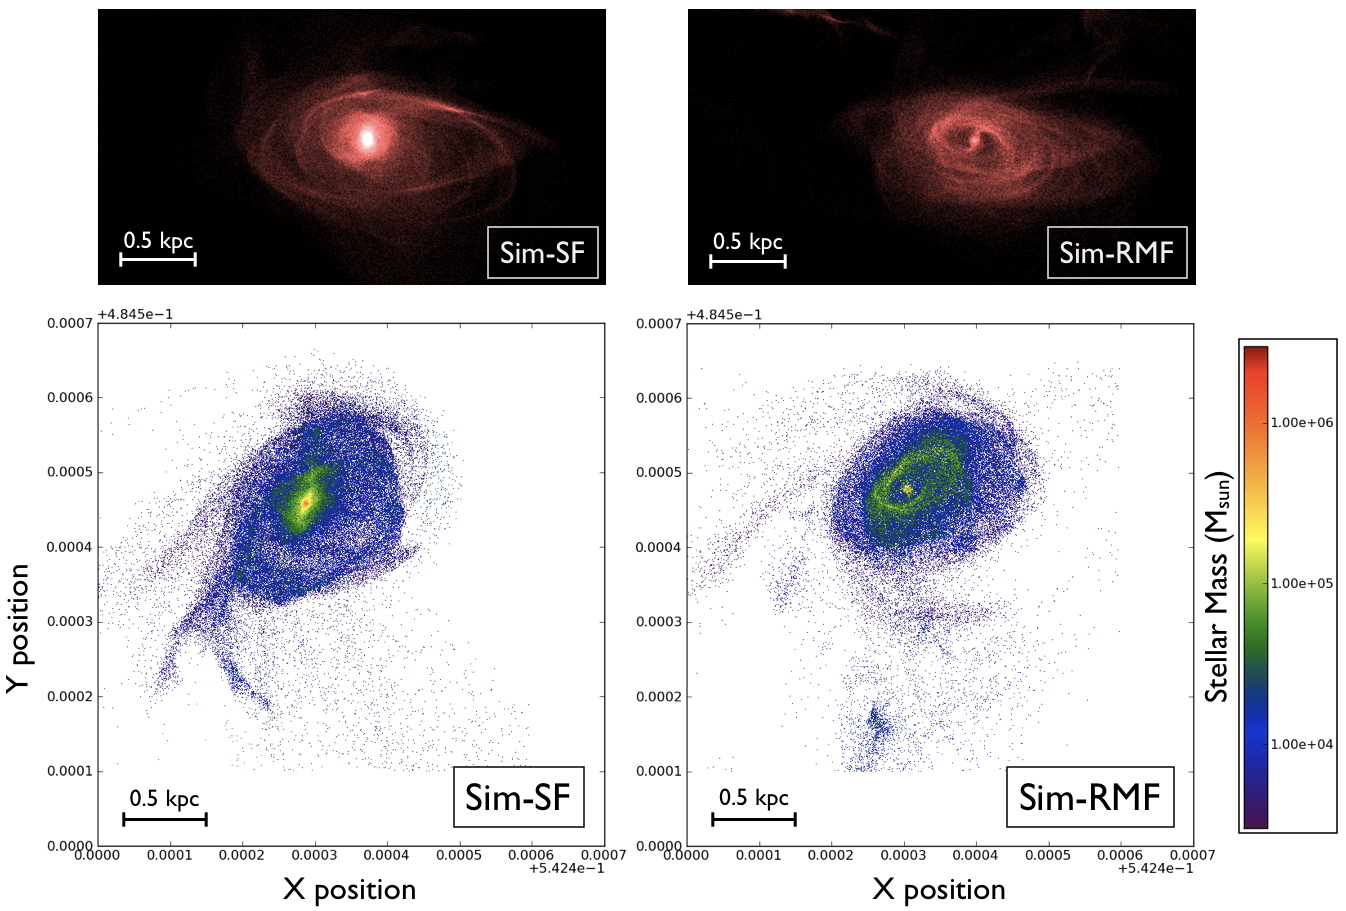 Simulating Galaxies for Fun and Profit